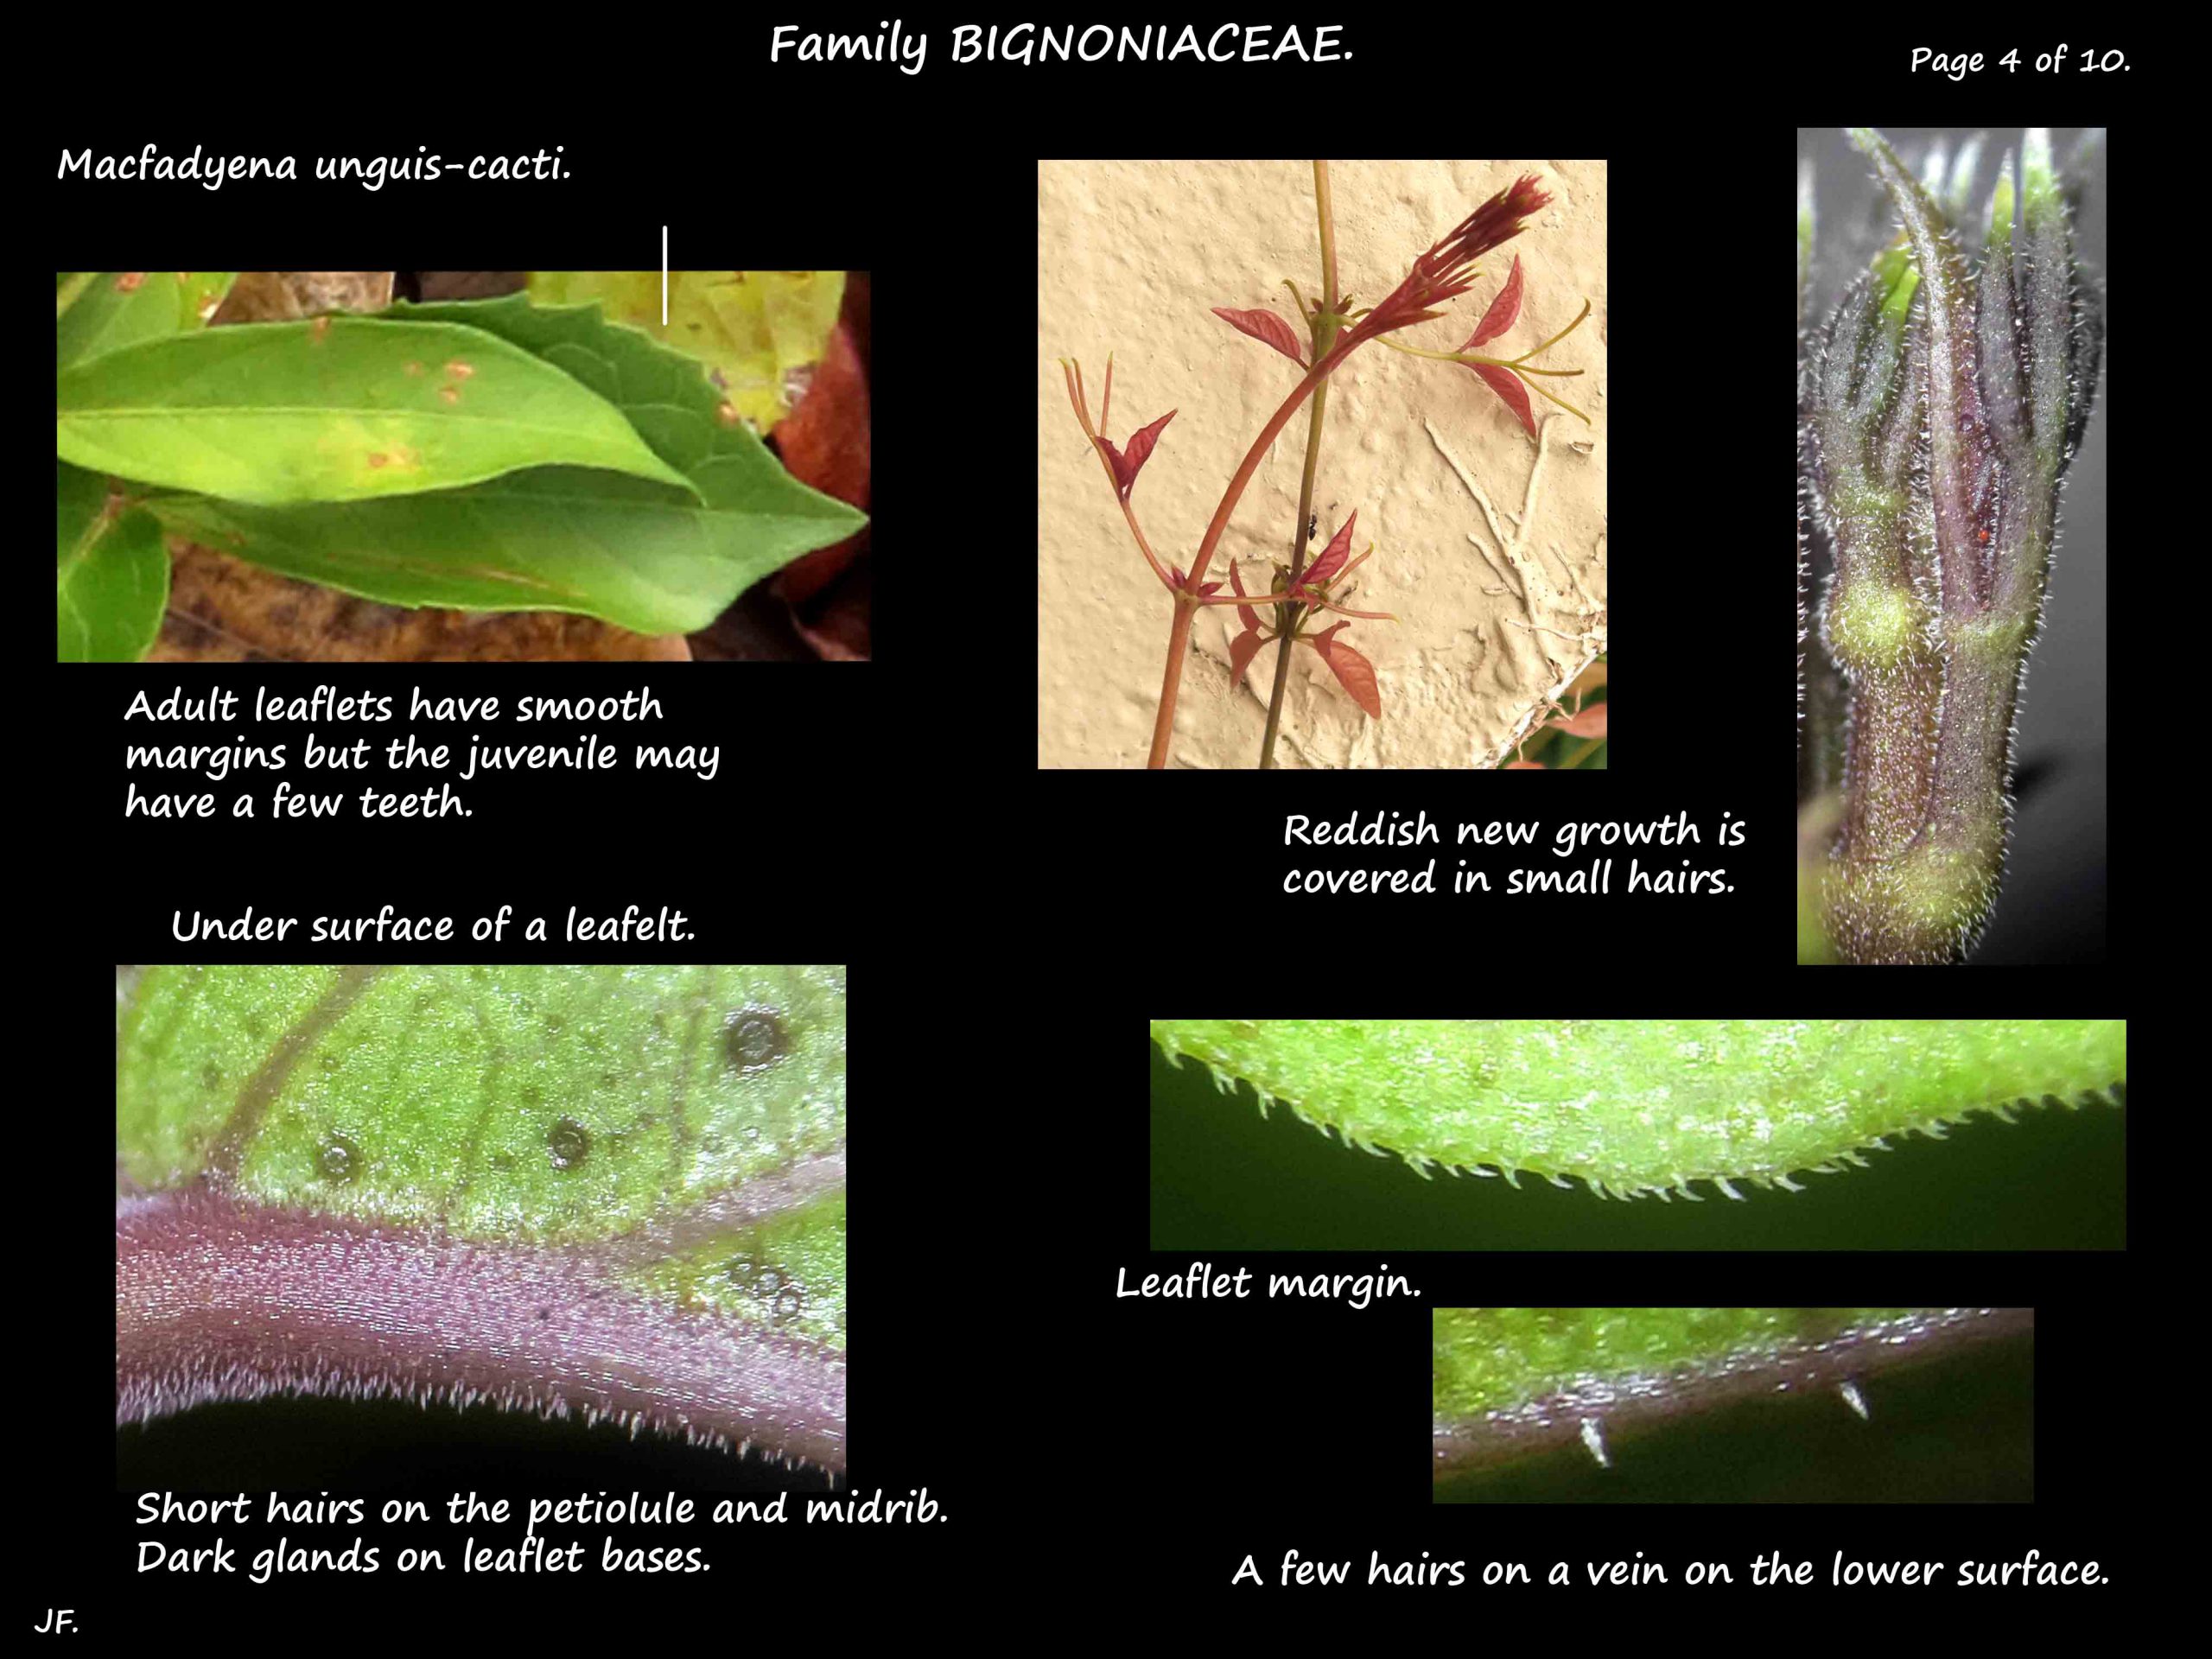 4 Macfadyena leaf glands & hairs